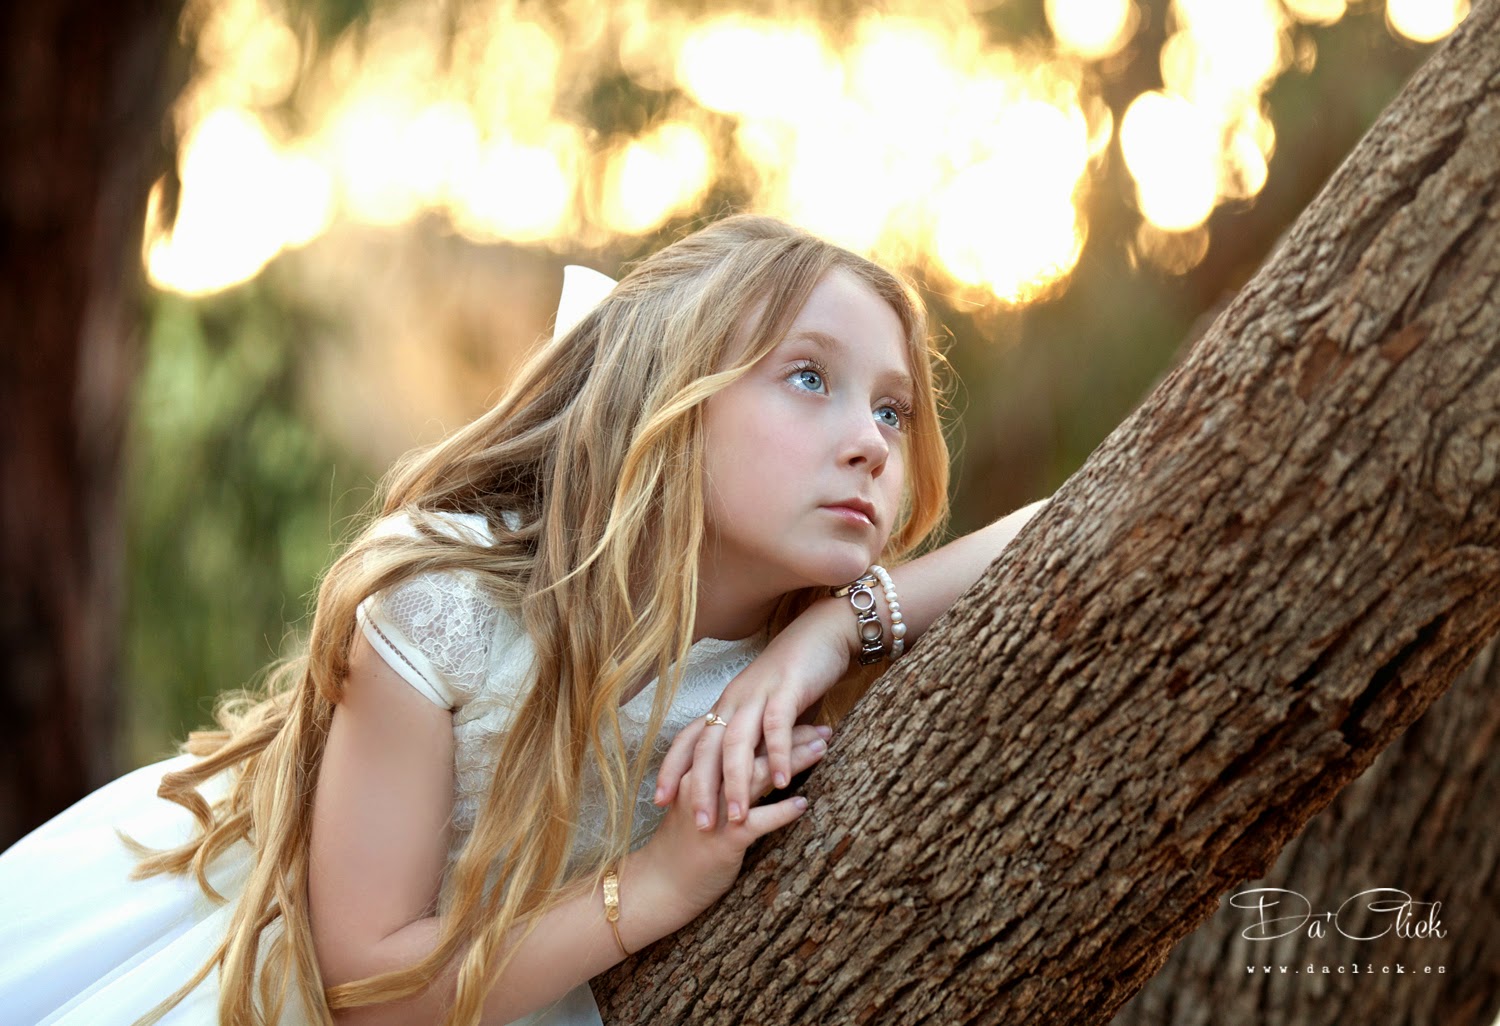 Retrato de niña de comunión en exterior, apoyada en arbol mirando al horizonte